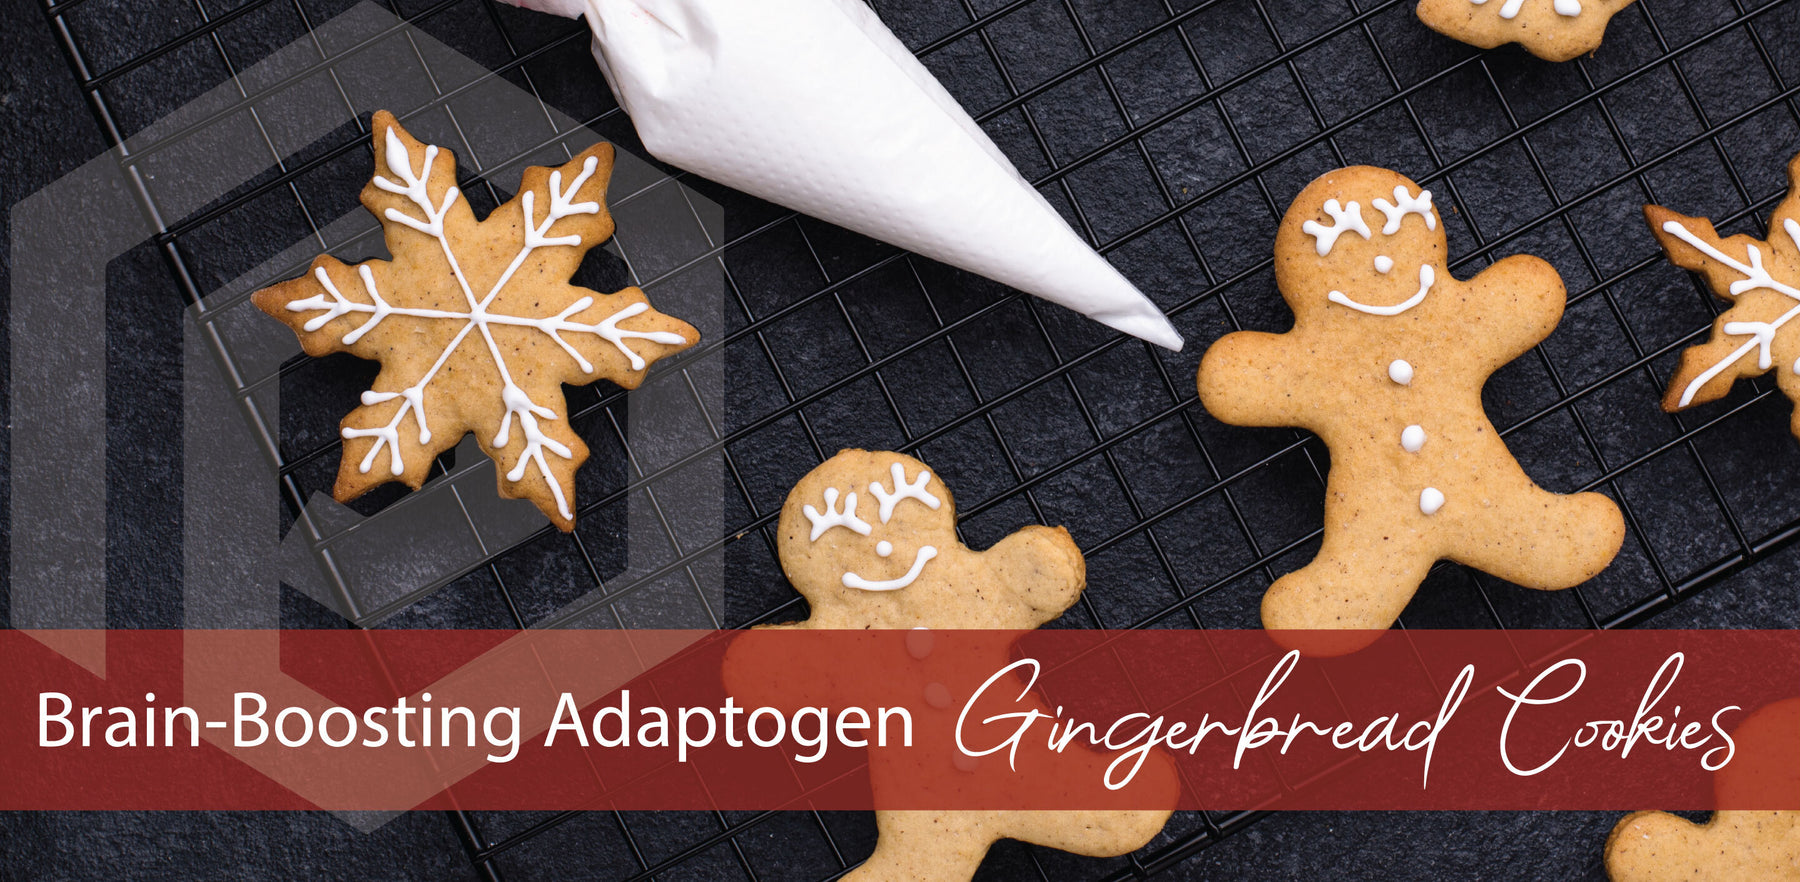 Brain-Boosting Adaptogen Gingerbread Cookies